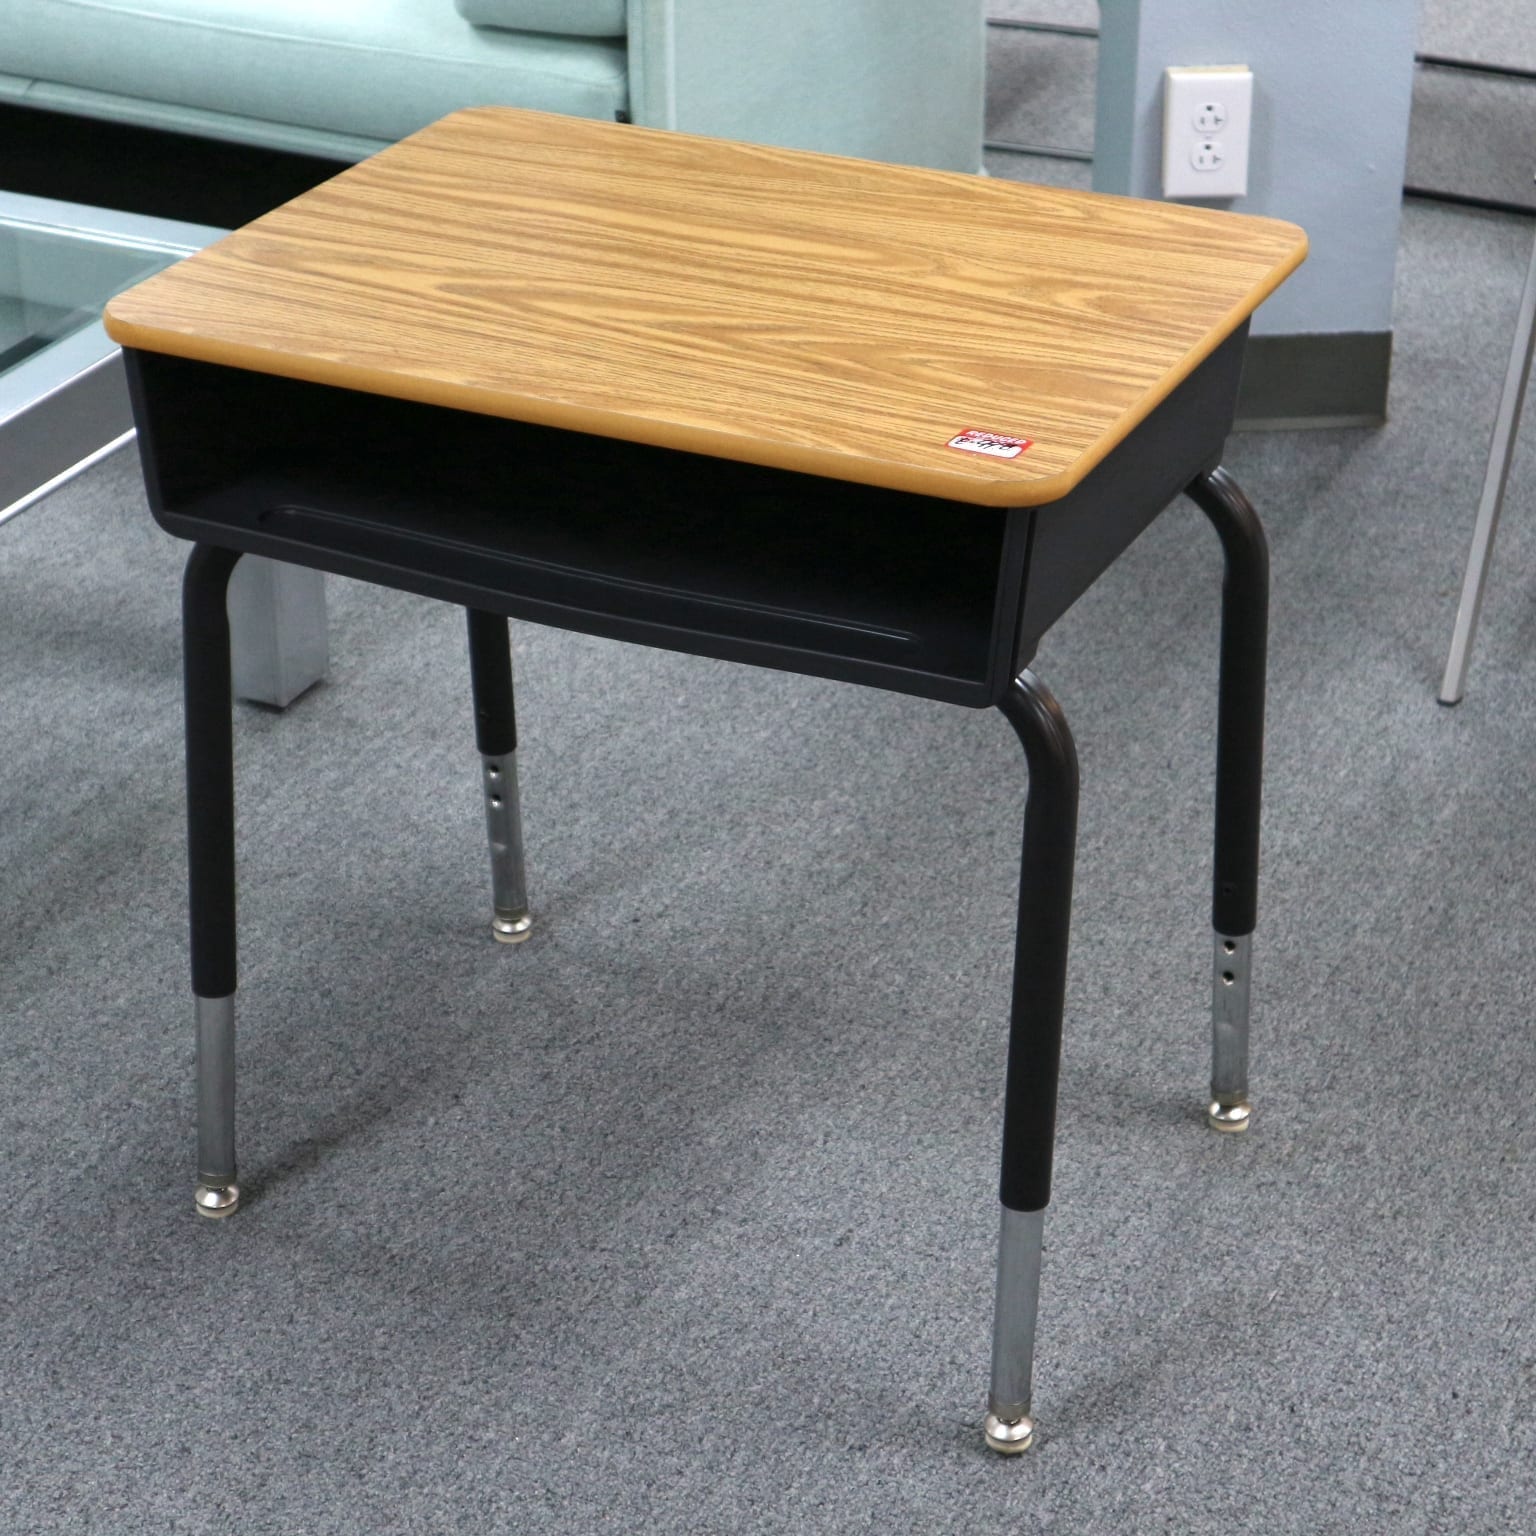 School - Student Desk | Office Furniture Liquidations